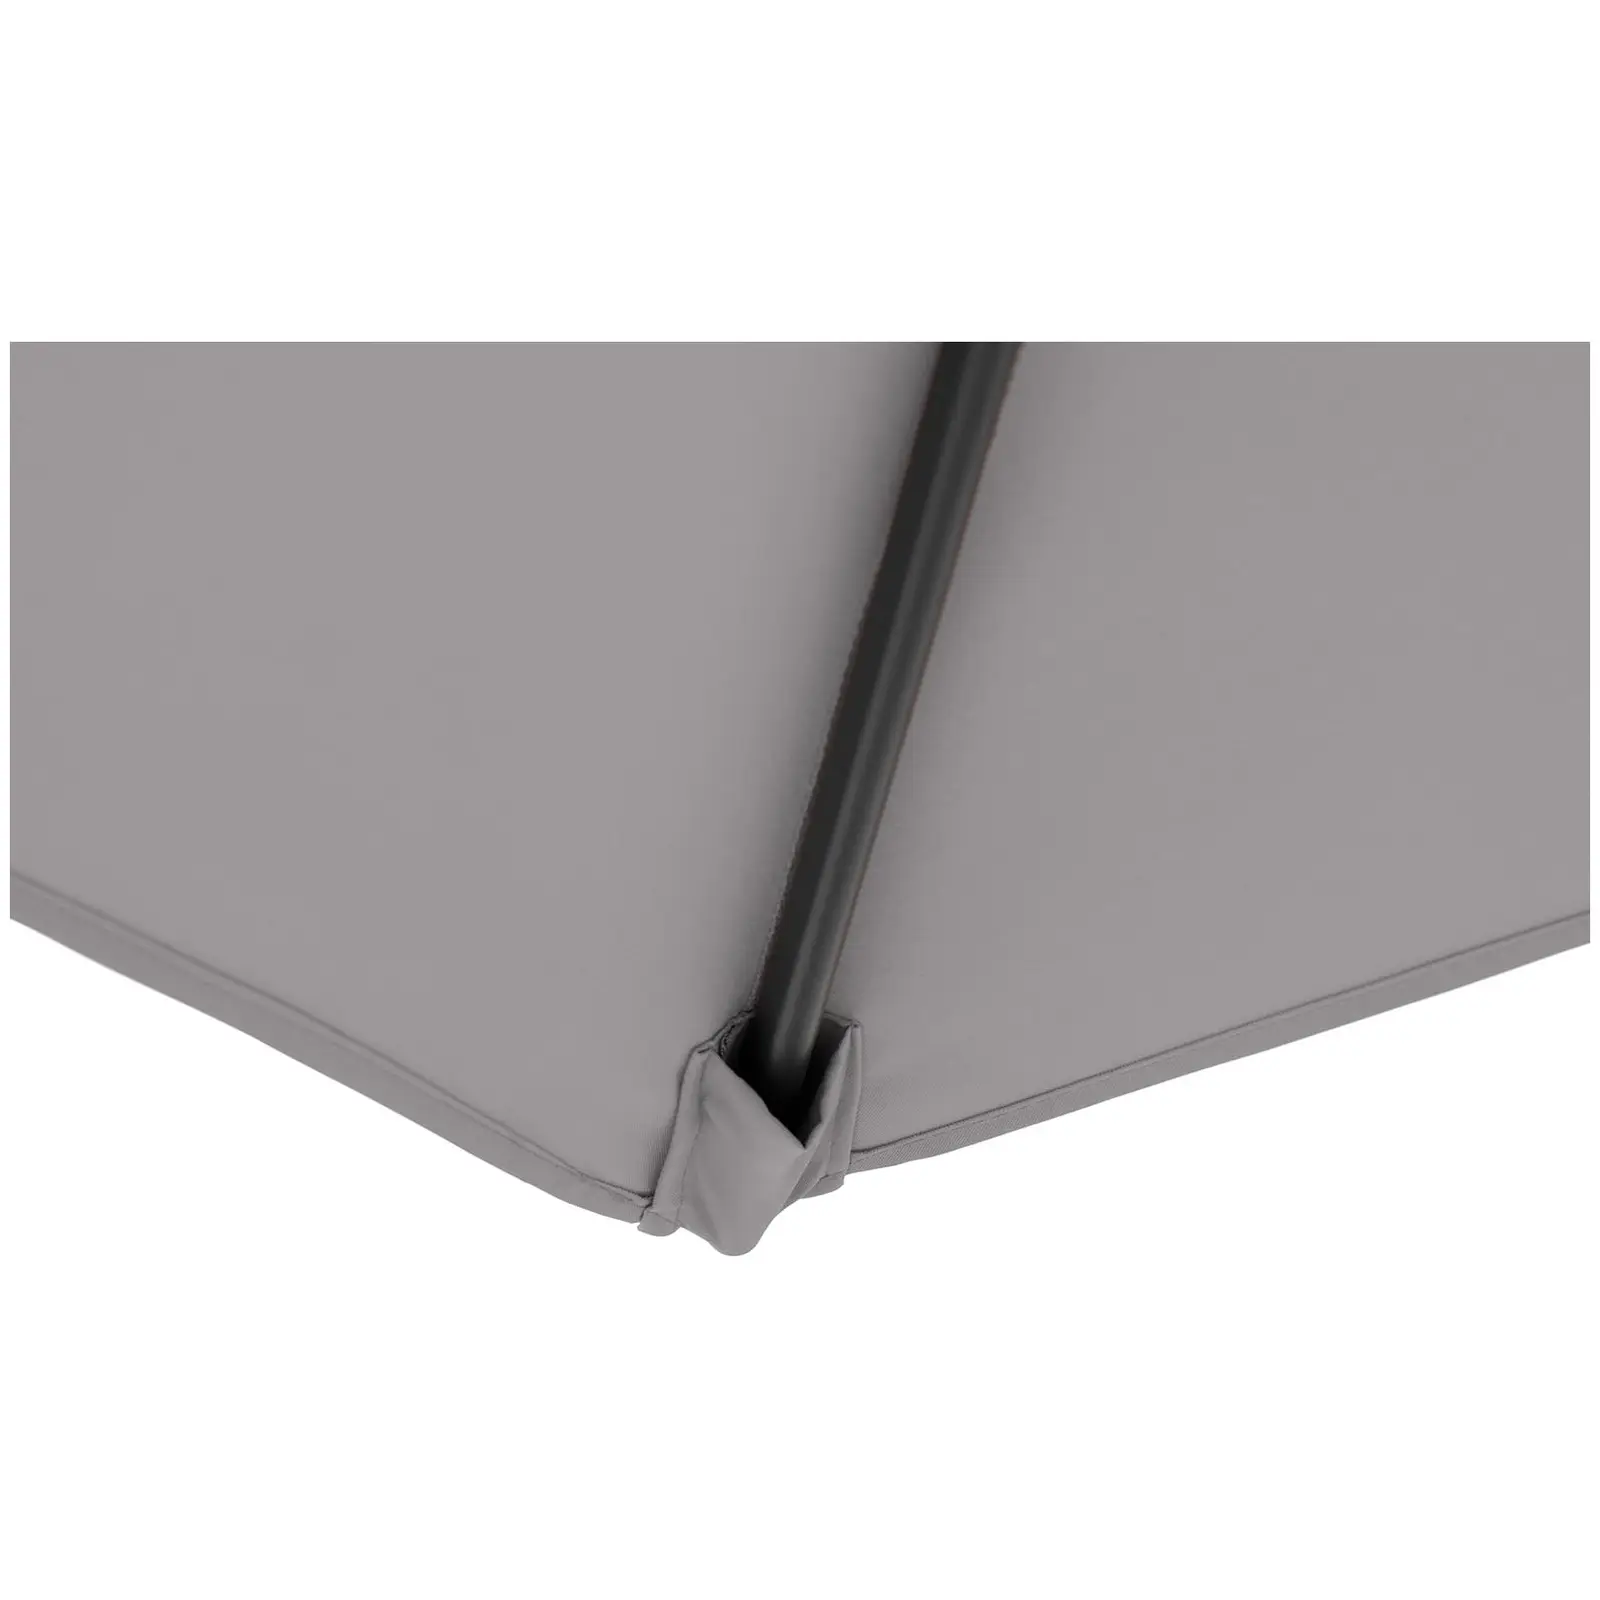 Ocasión Sombrilla de semáforo - gris oscuro - cuadrada - 250 x 250 cm - inclinable